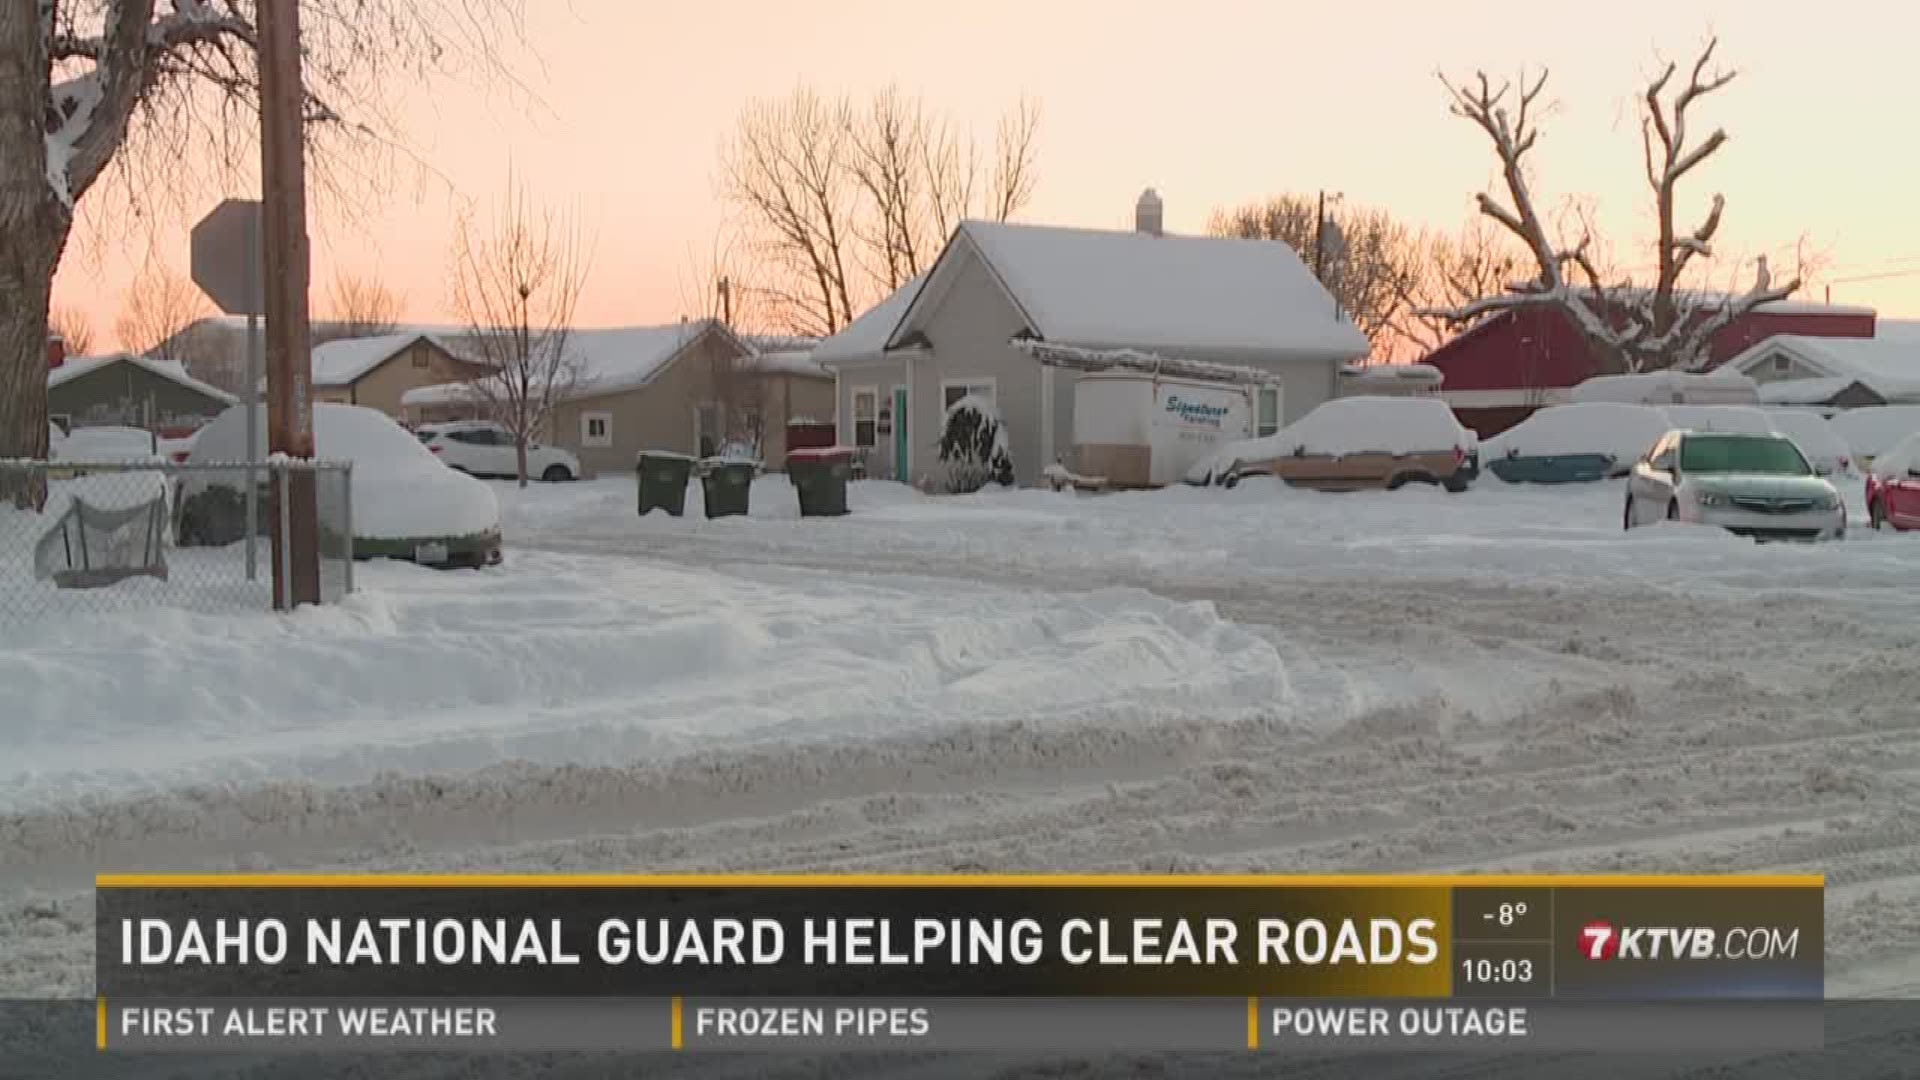 Idaho National Guard helping clear roads.